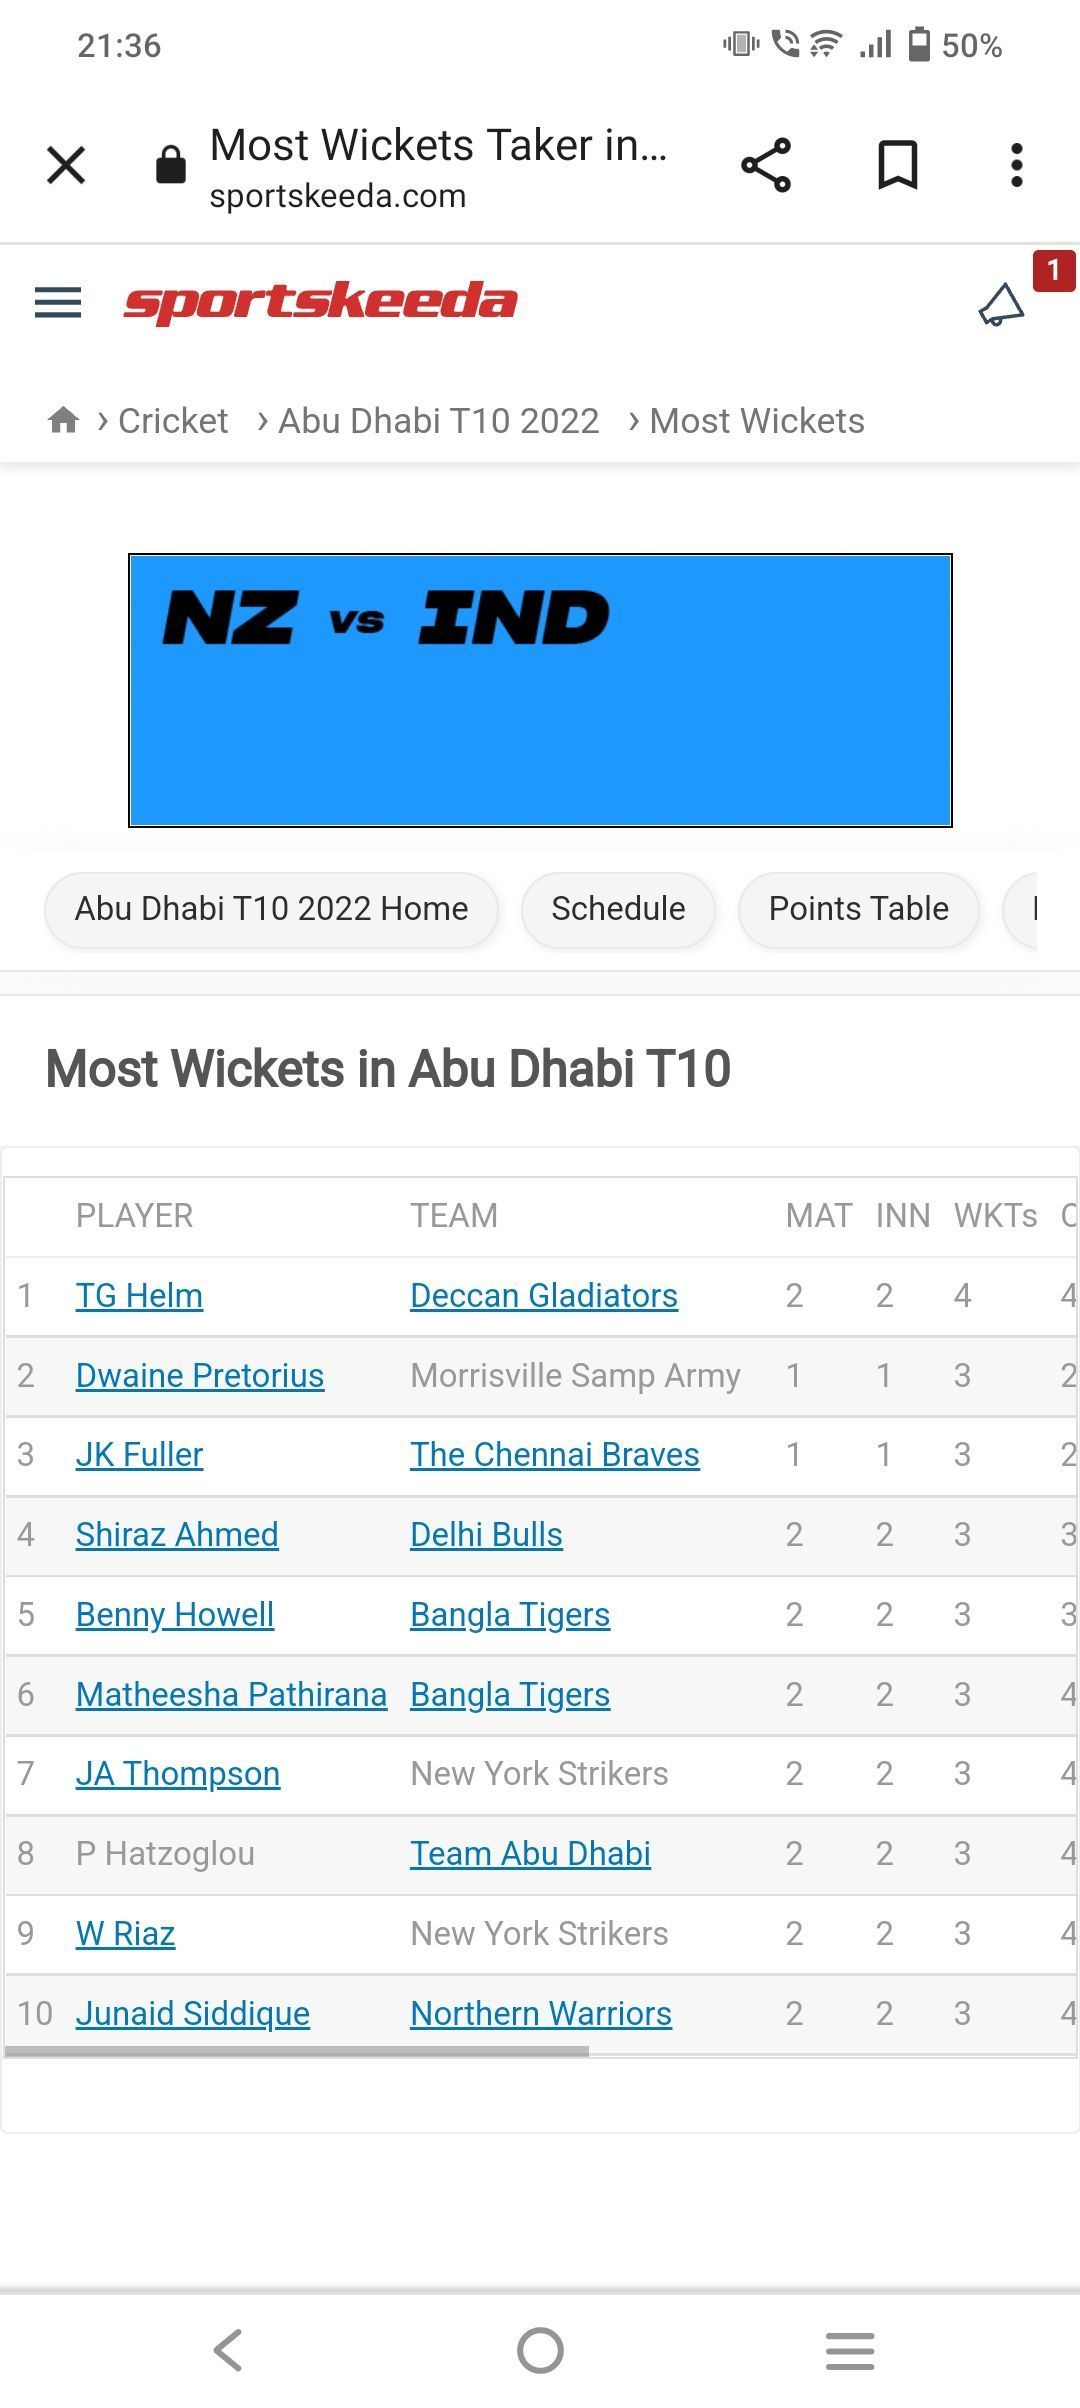 Updated list of leading run scorers in Abu Dhabi T10 League 